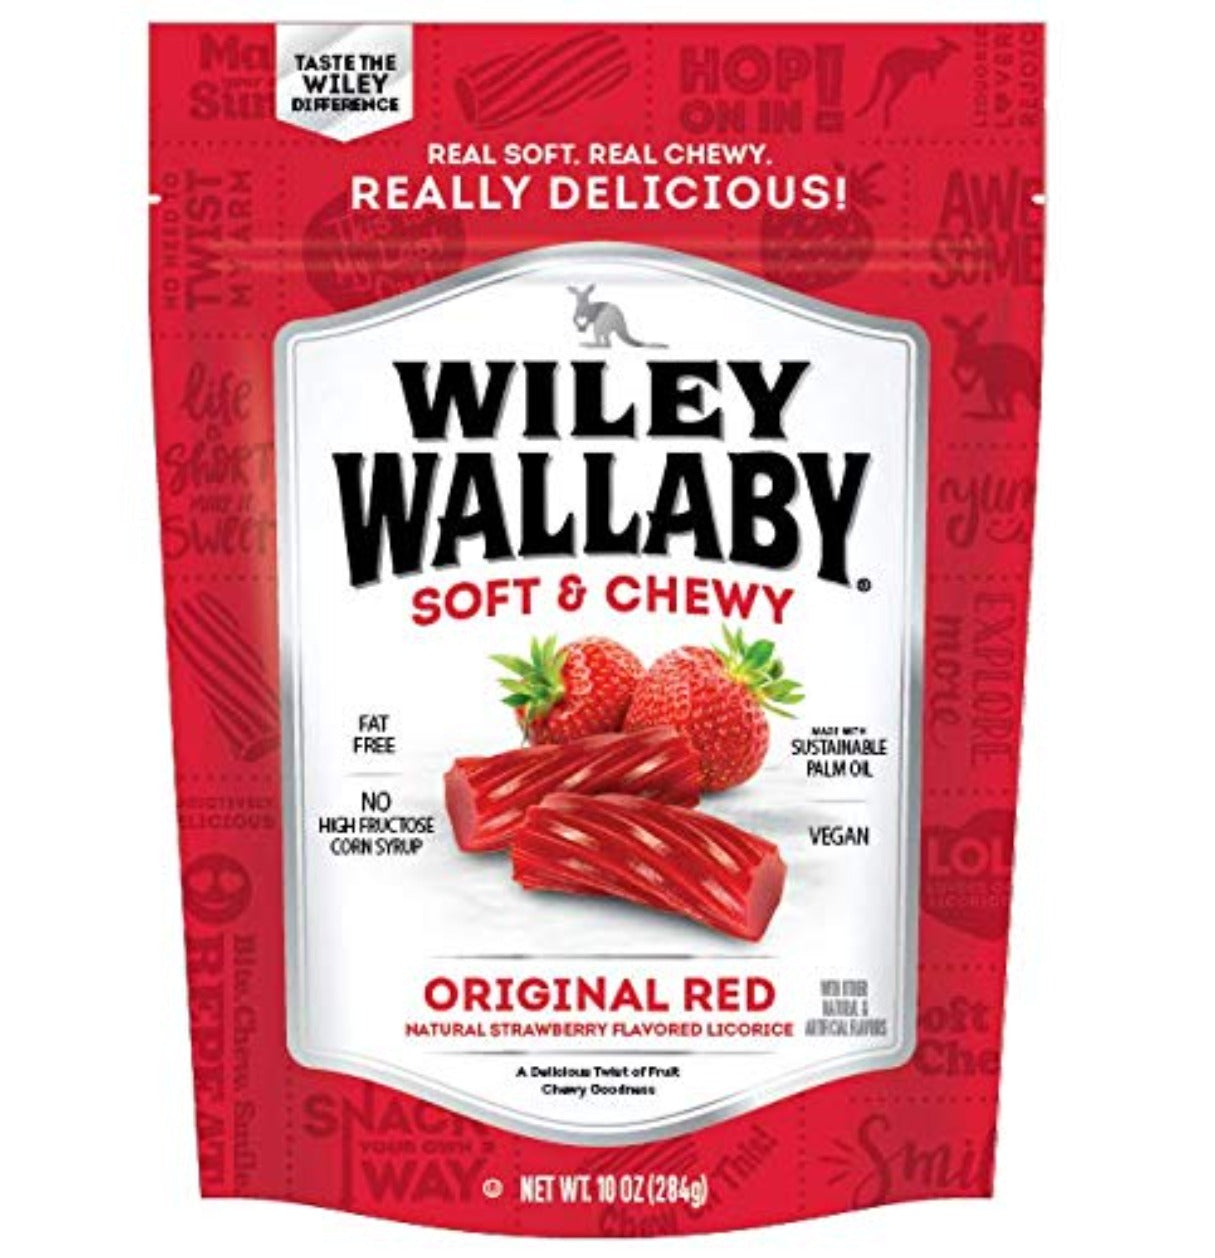 Wiley Wallaby Soft & Chewy Strawberry Licorice 10oz - 10ct